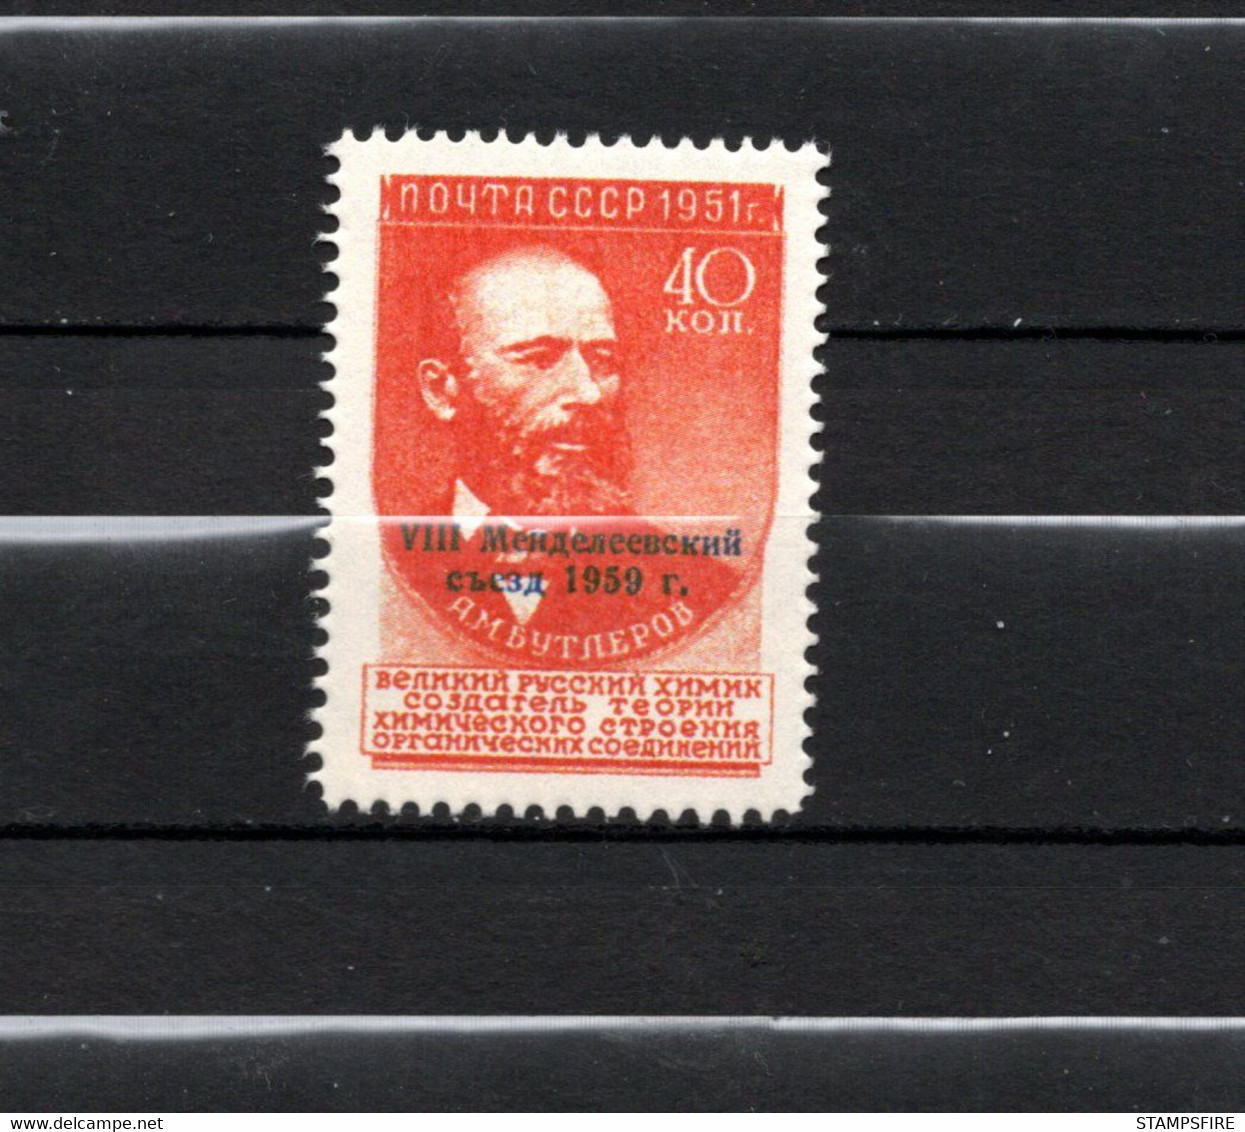 RUSSIA 1959 UNISSUED VIII MENDELEEV CONGRESS MNH - Unused Stamps